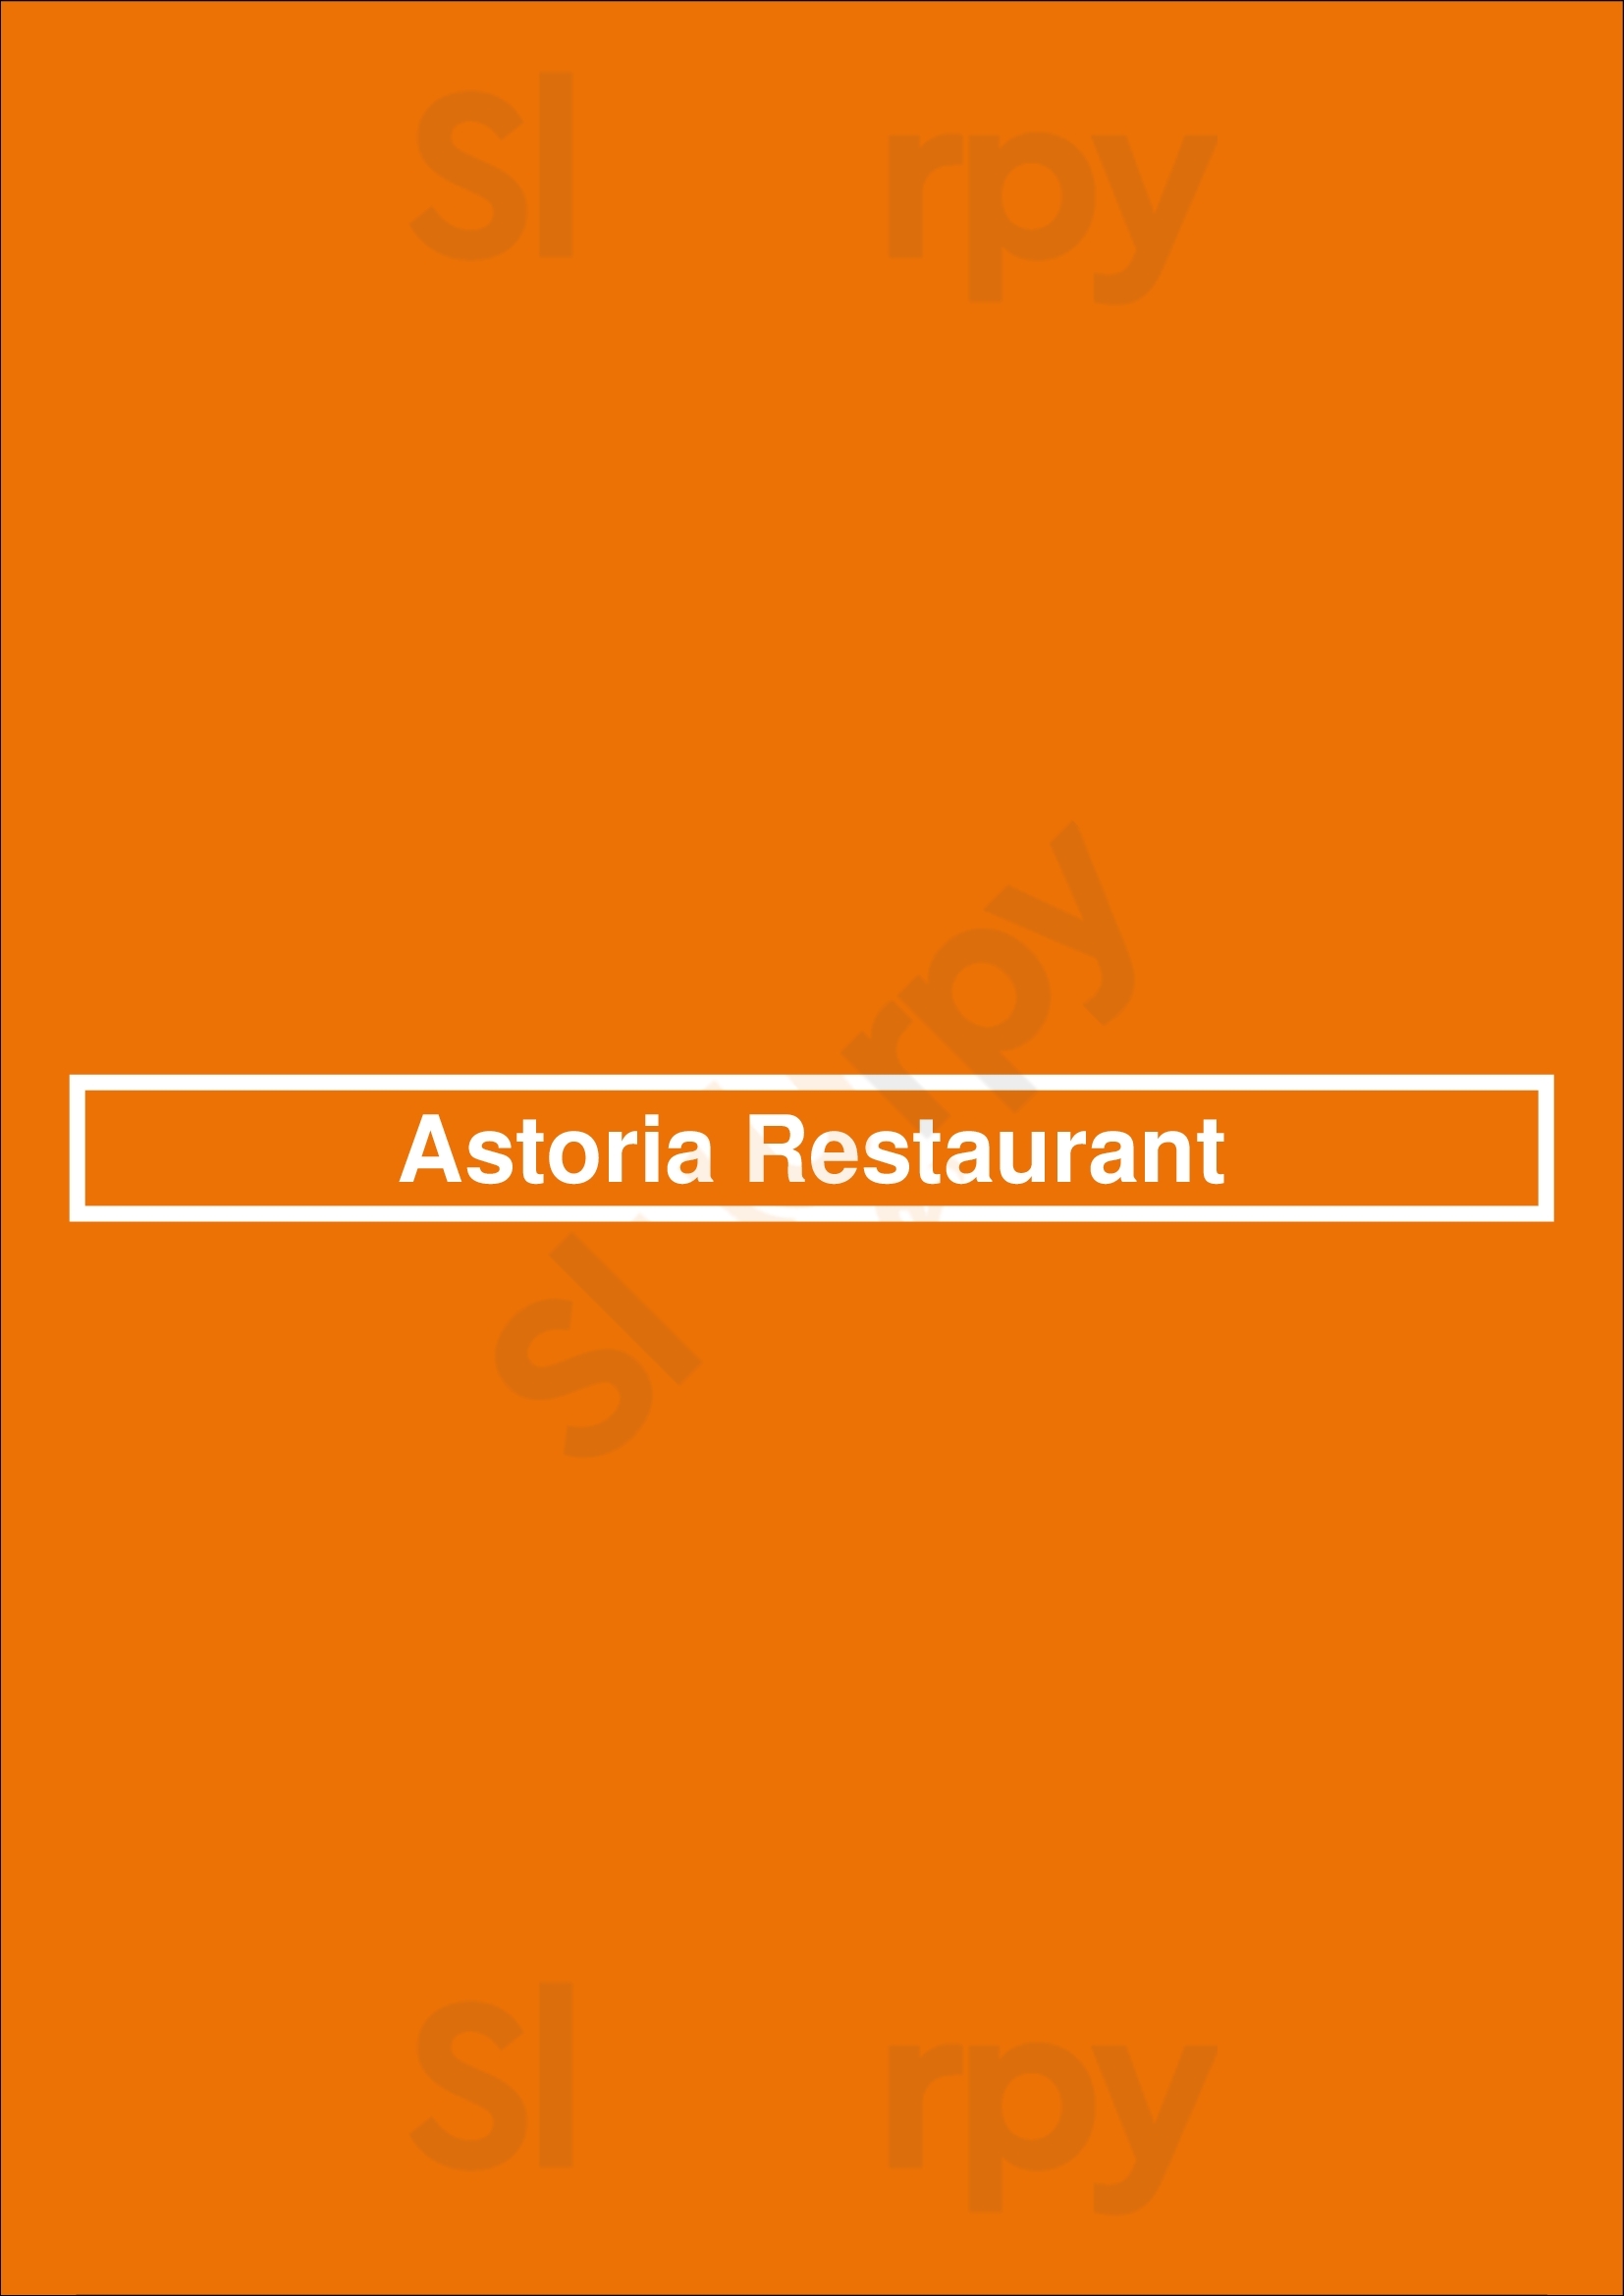 Astoria Restaurant Philadelphia Menu - 1